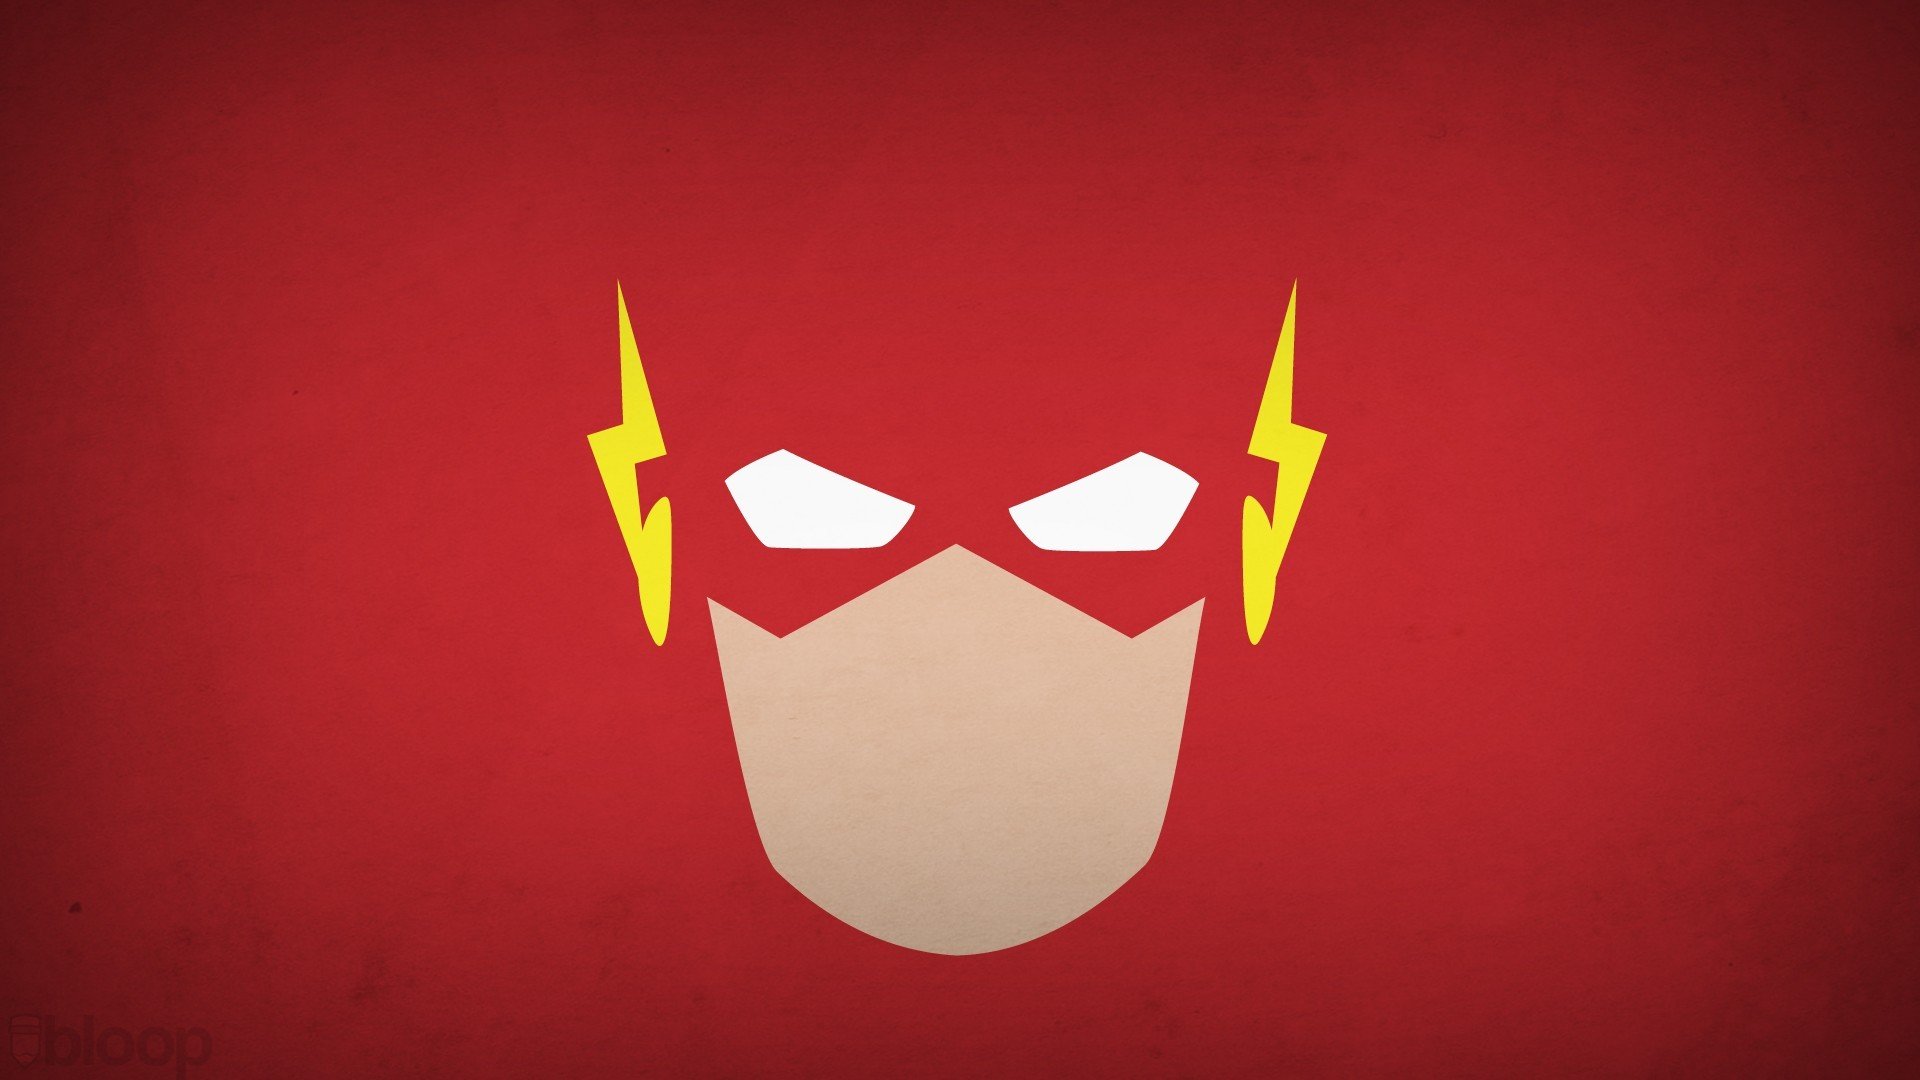 hero, Flash, Blo0p, Simple background, Comics, DC Comics, Minimalism, Superhero, The Flash, Red background Wallpaper